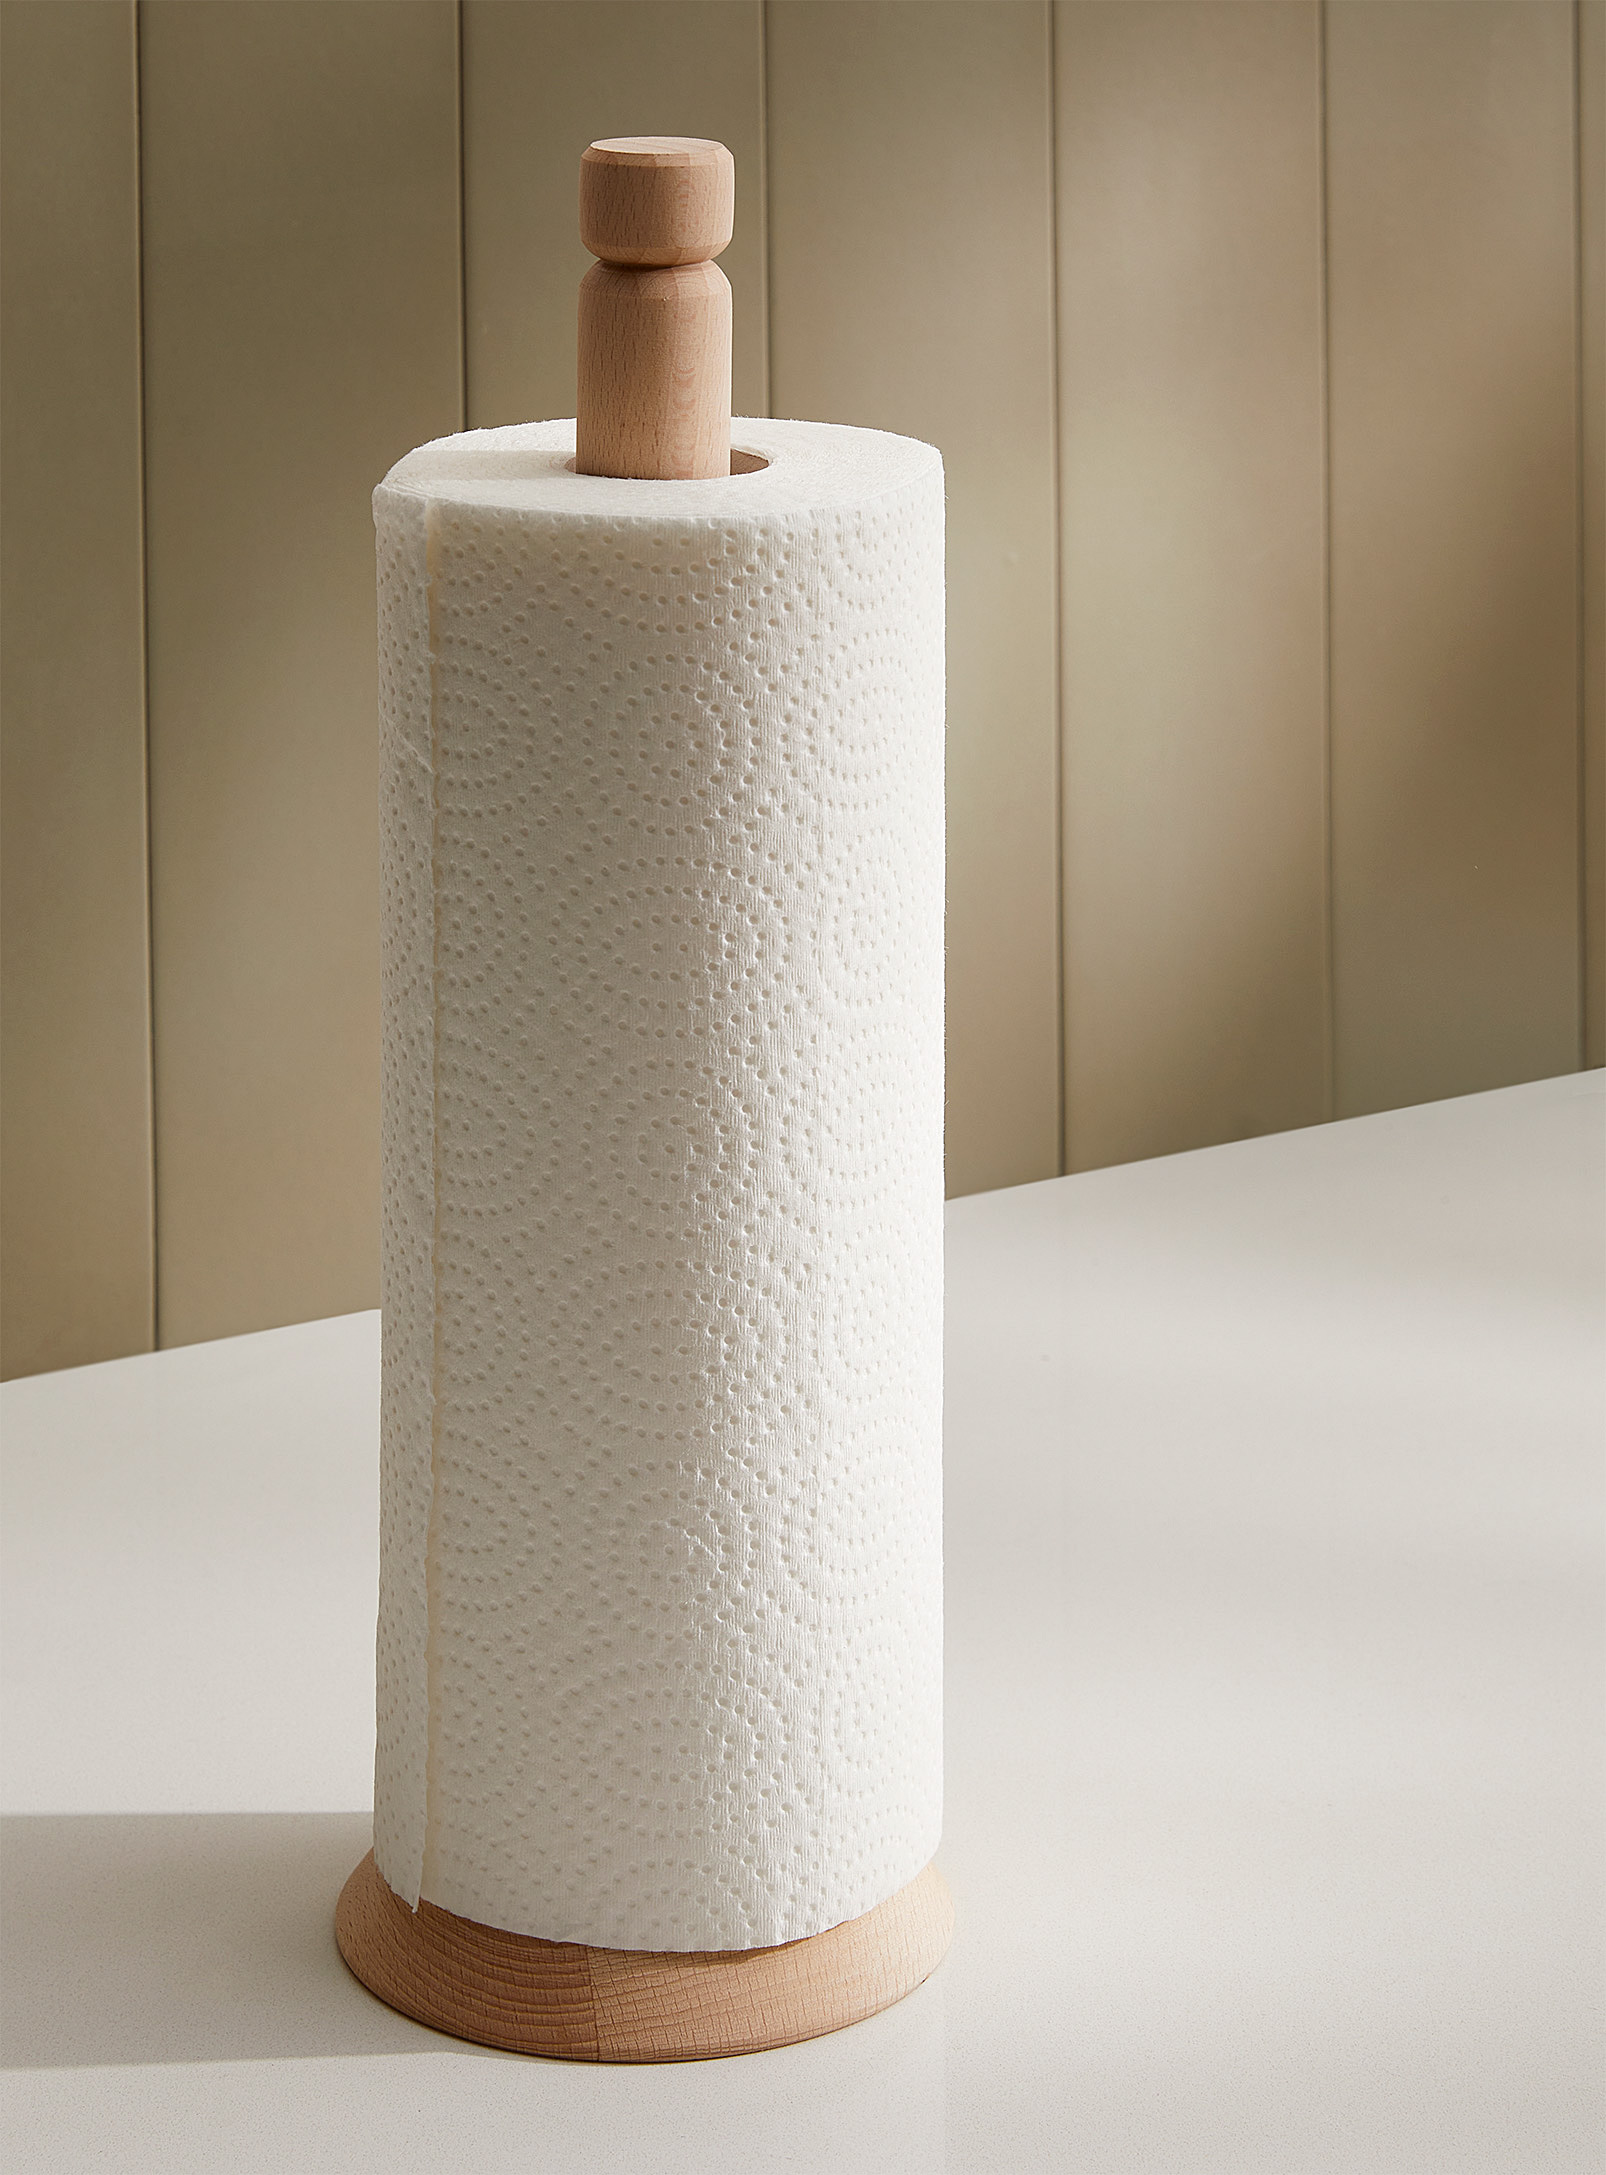 Simons Maison - Natural wood paper towel holder